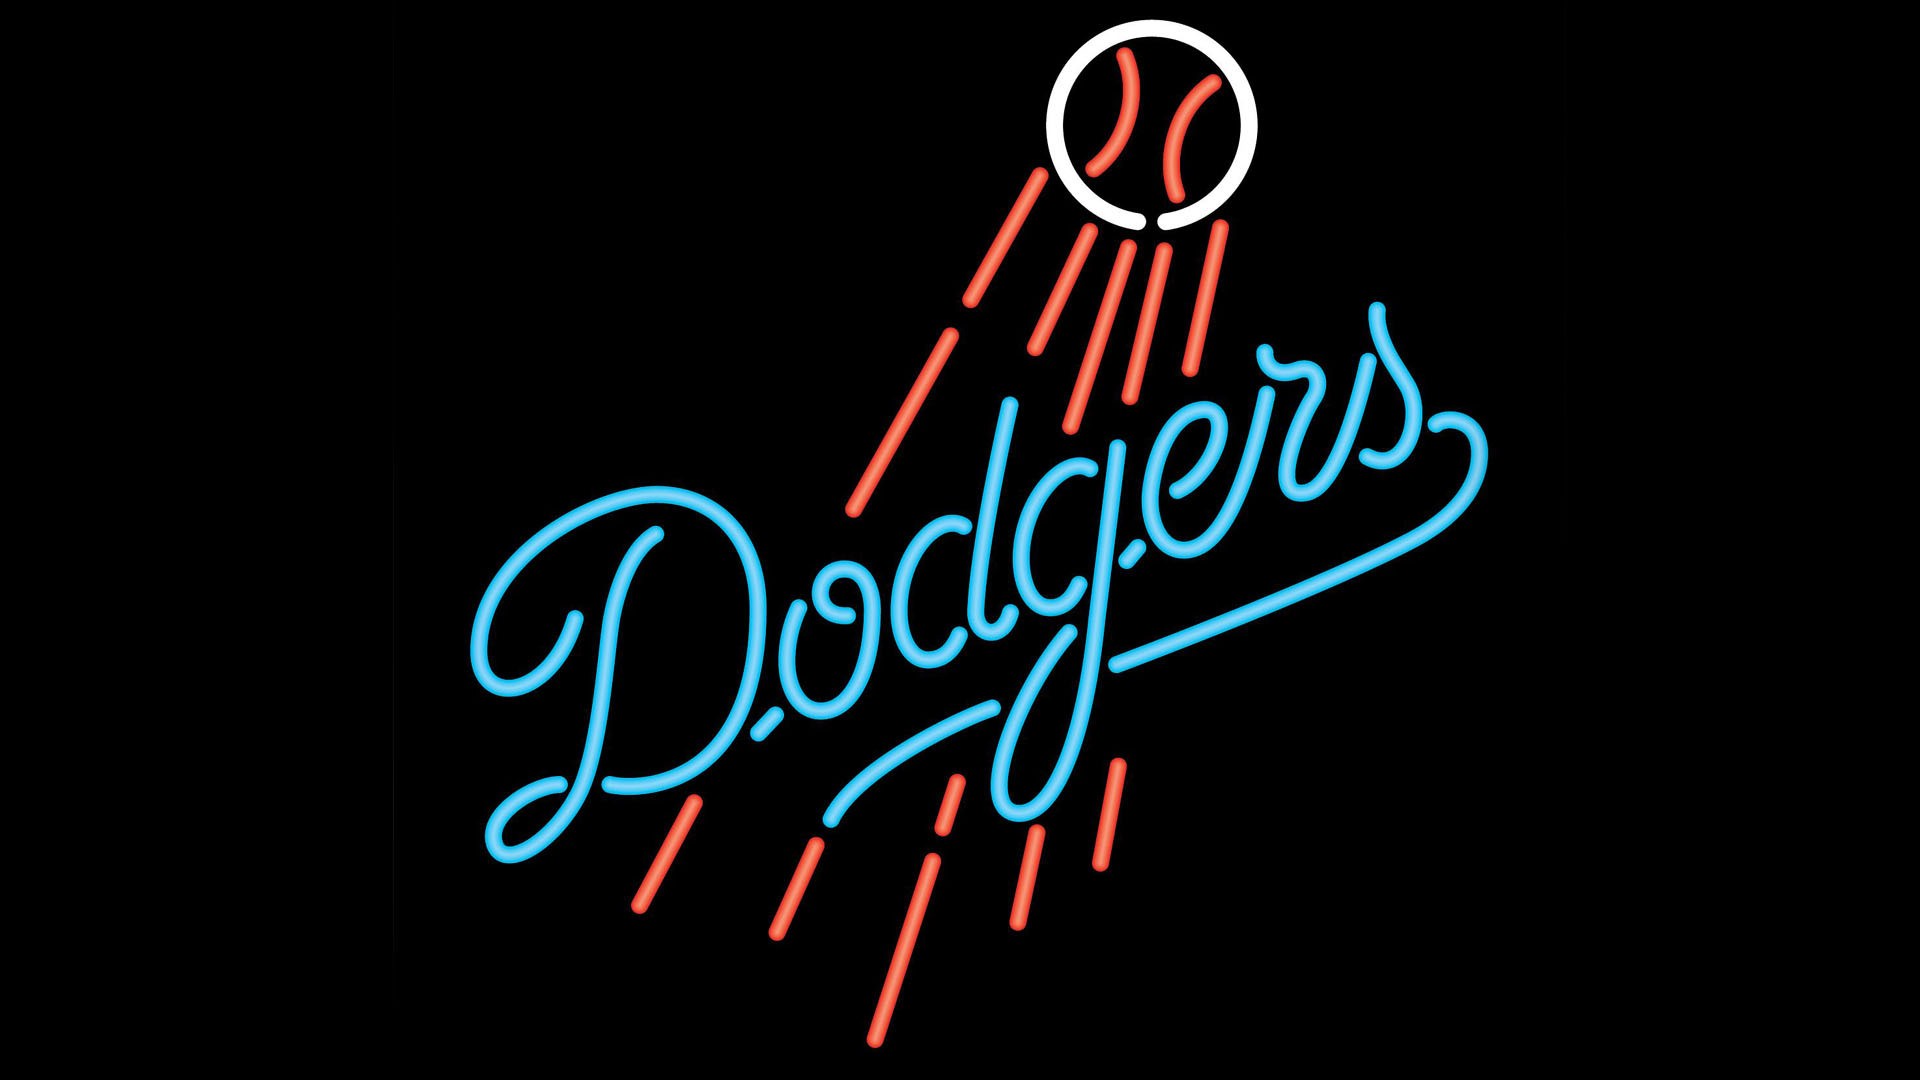 Cool Dodgers Wallpaper Wallpapers